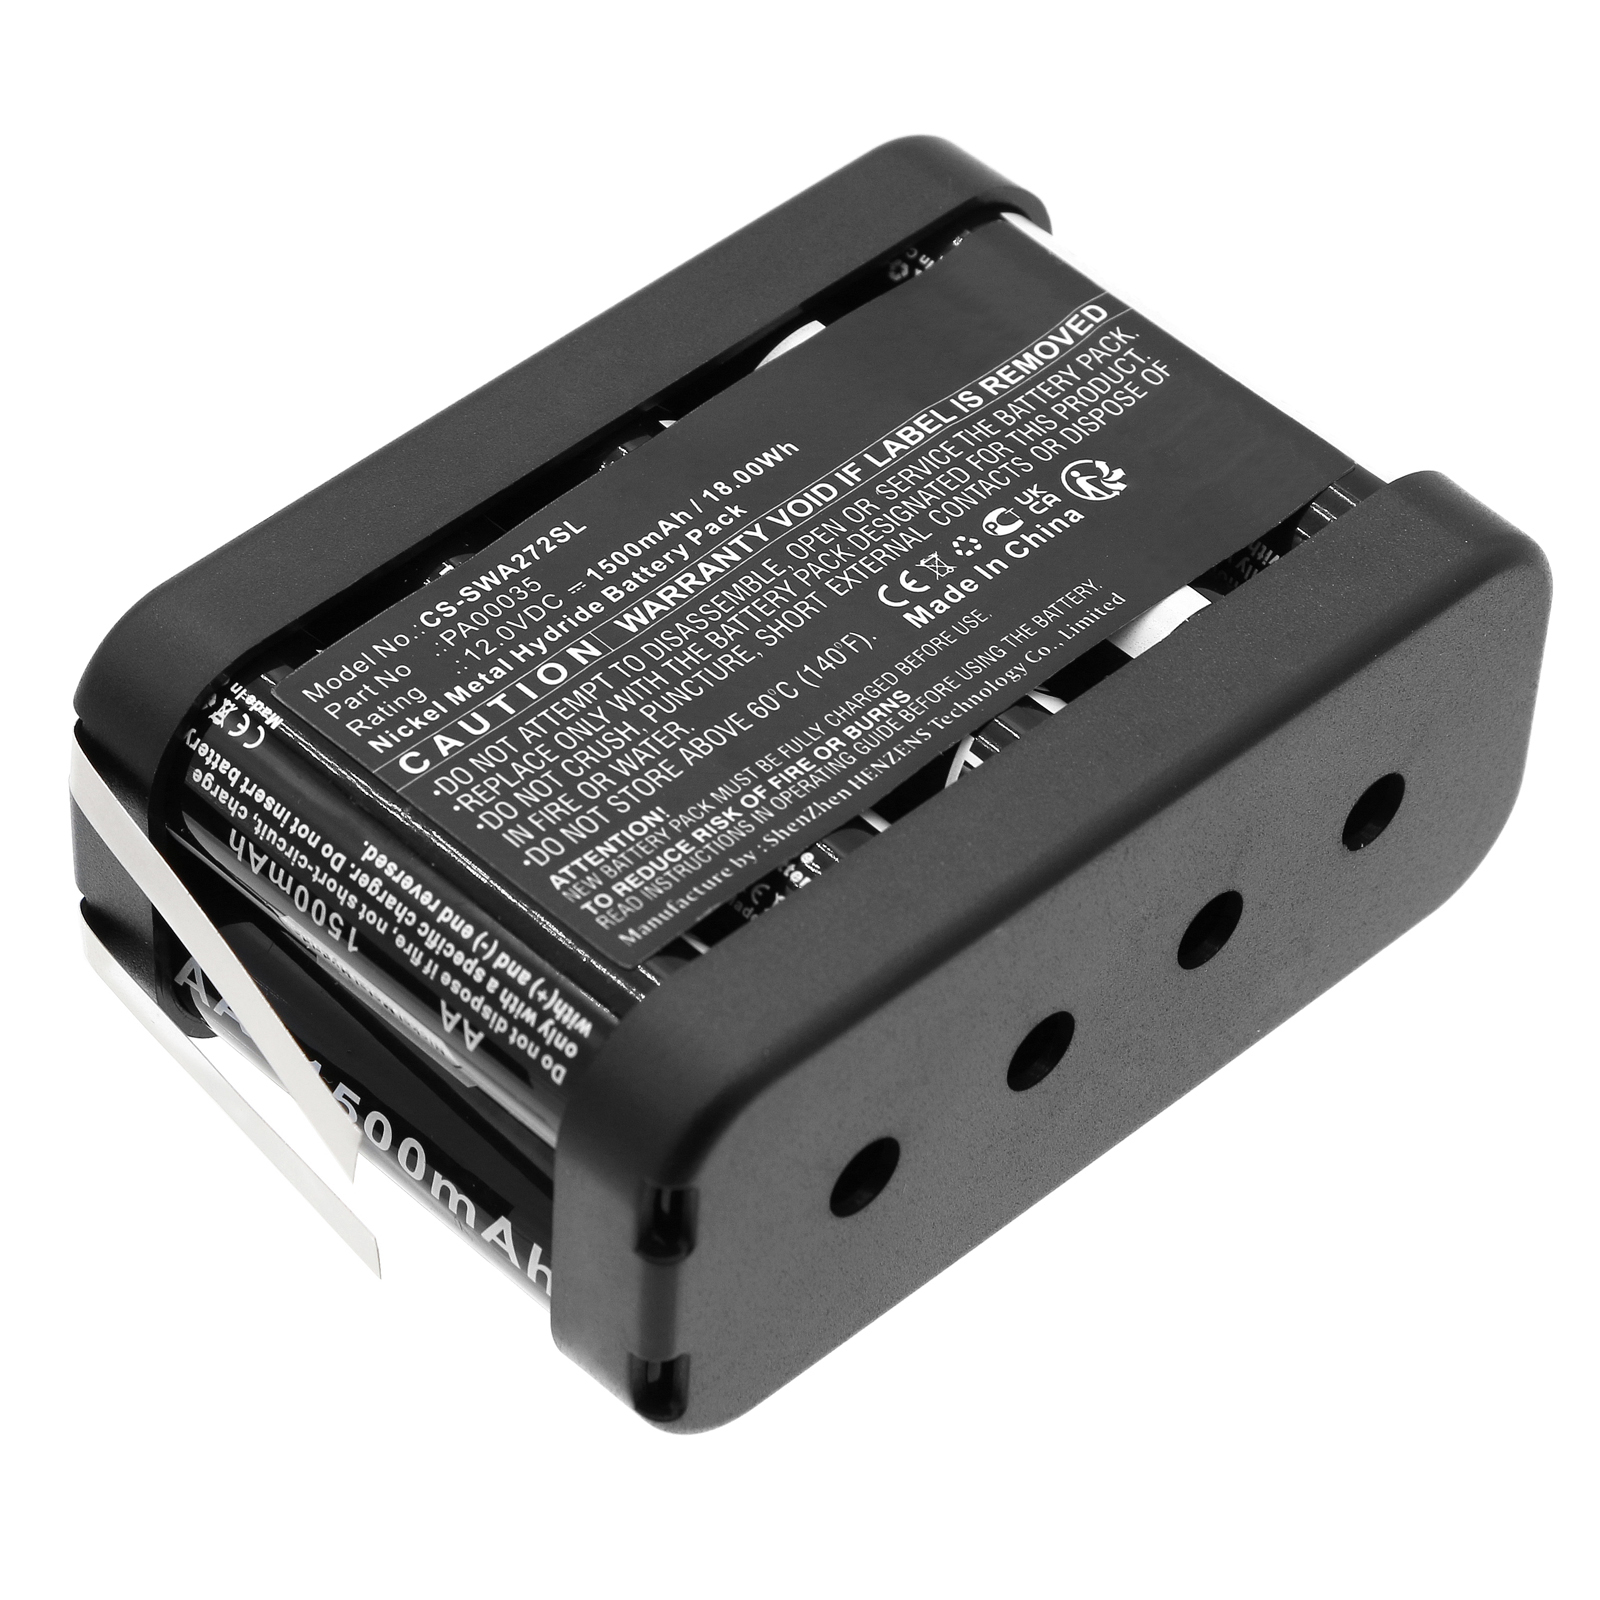 Synergy Digital Alarm System Battery, Compatible with Simon 6711, PA00035 Alarm System Battery (Ni-MH, 12V, 1500mAh)